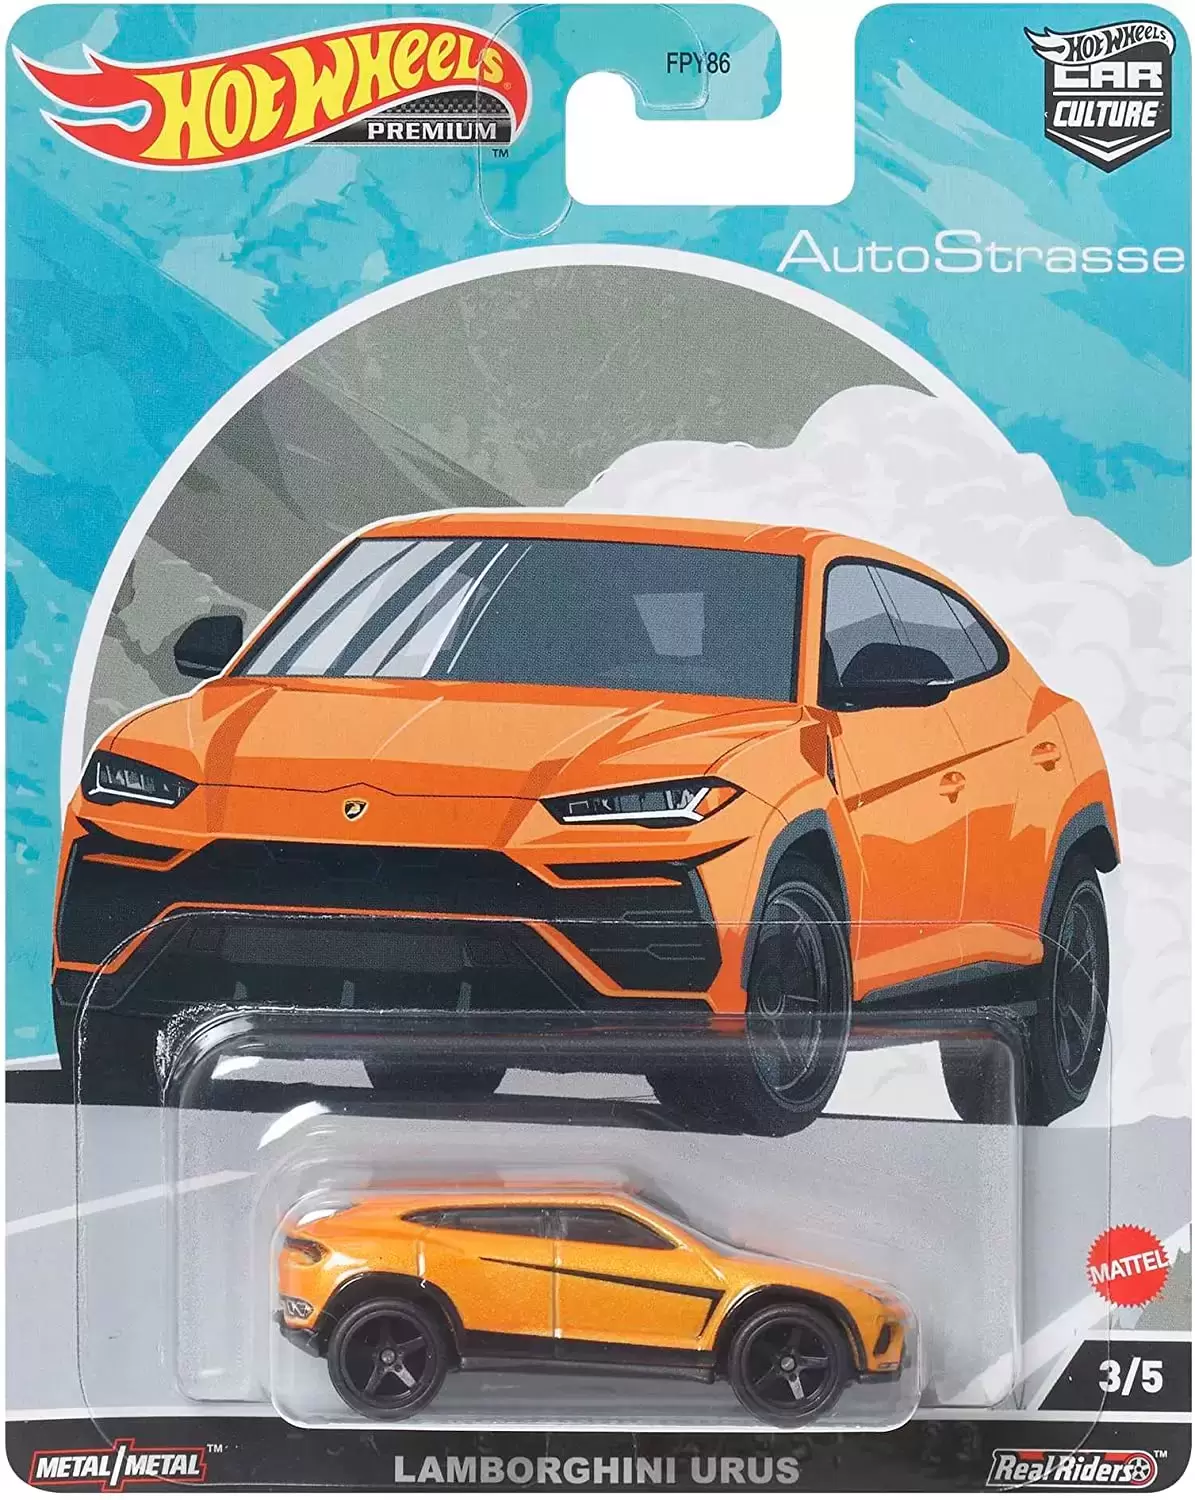 Hot Wheels - Car Culture - AutoStrasse - Lamborghini Urus